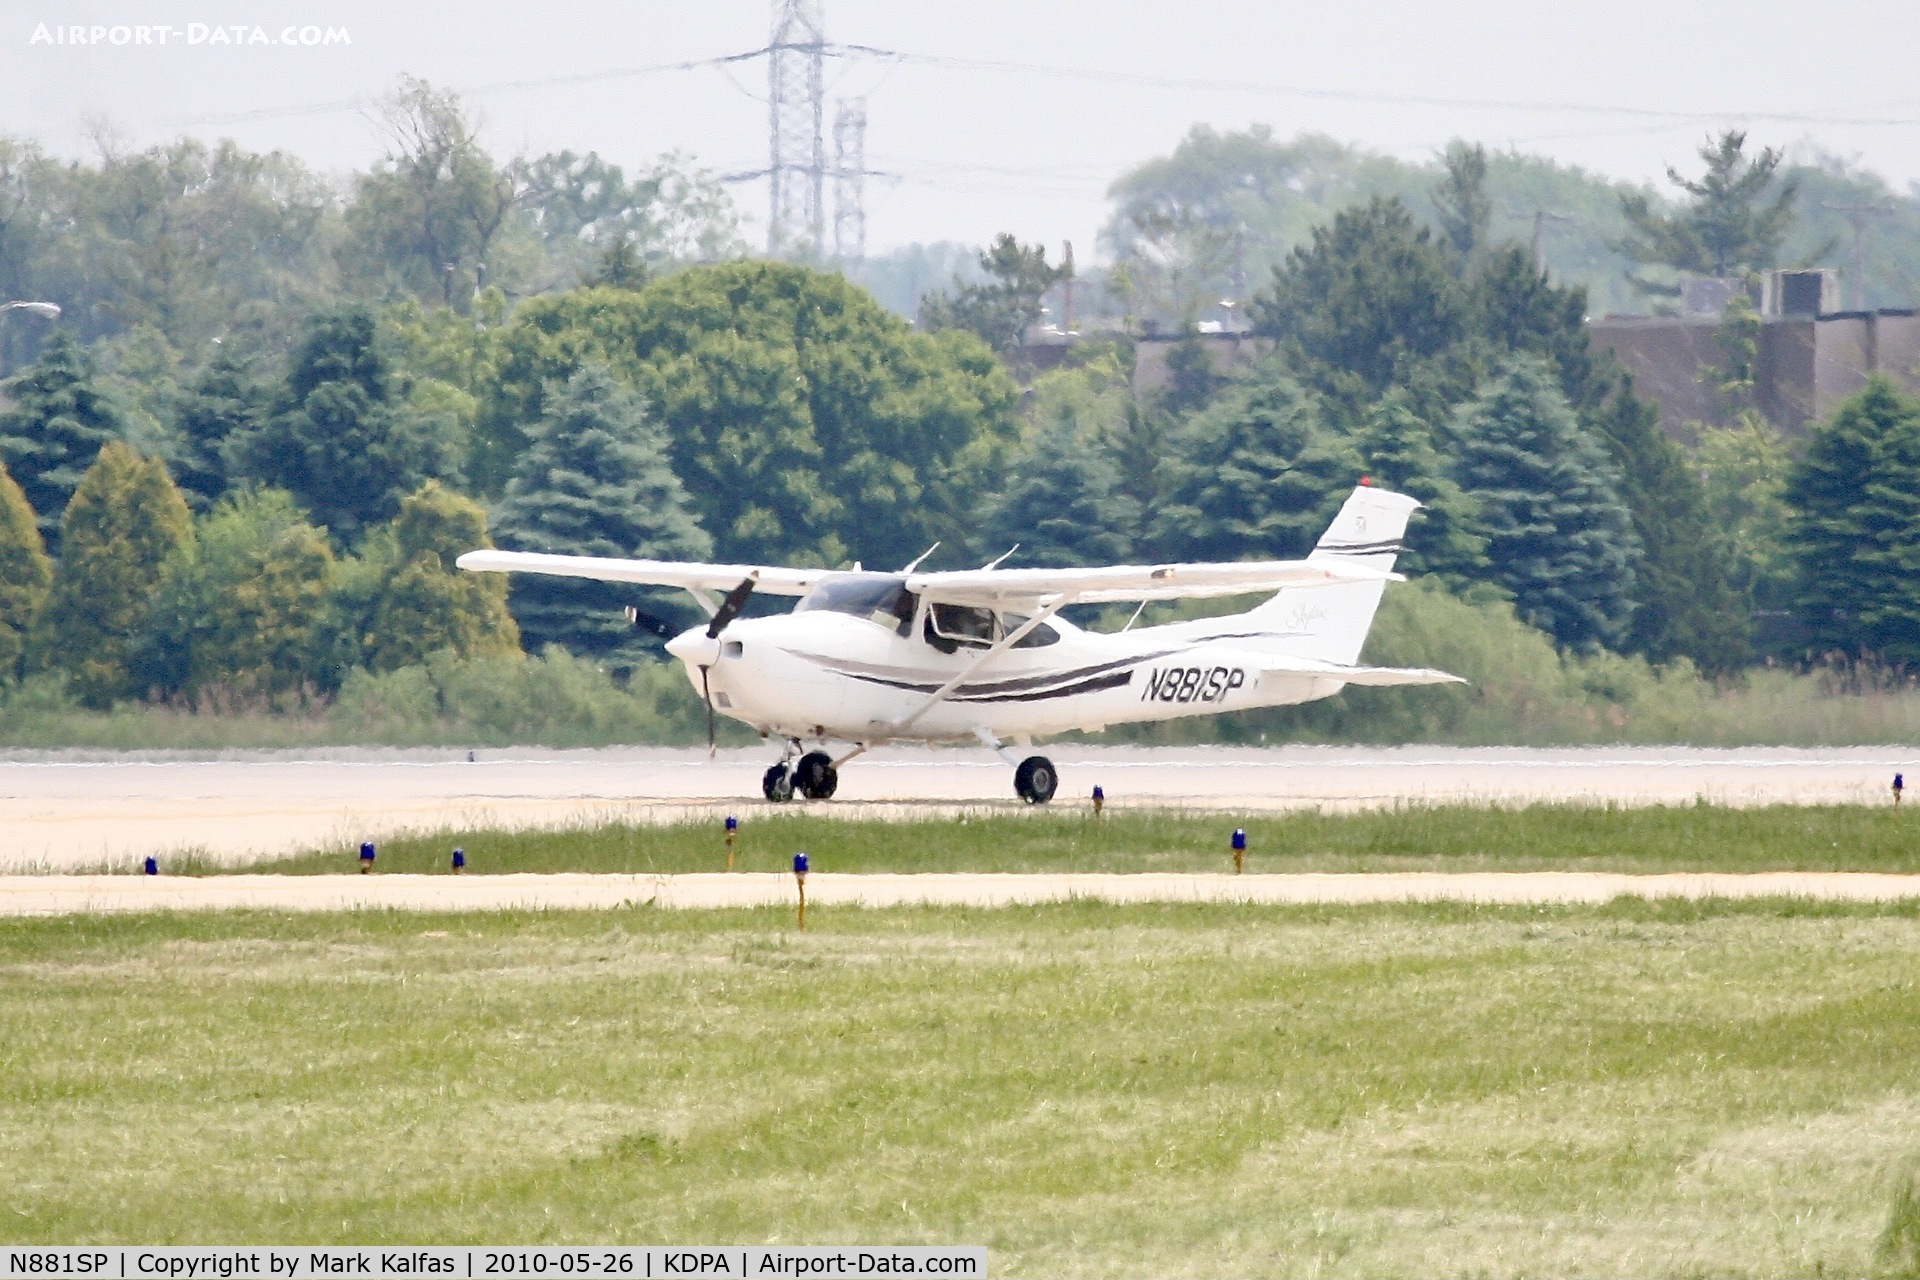 N881SP, 2000 Cessna 182S Skylane C/N 18280784, Cessna 182S, N881SP at KDPA